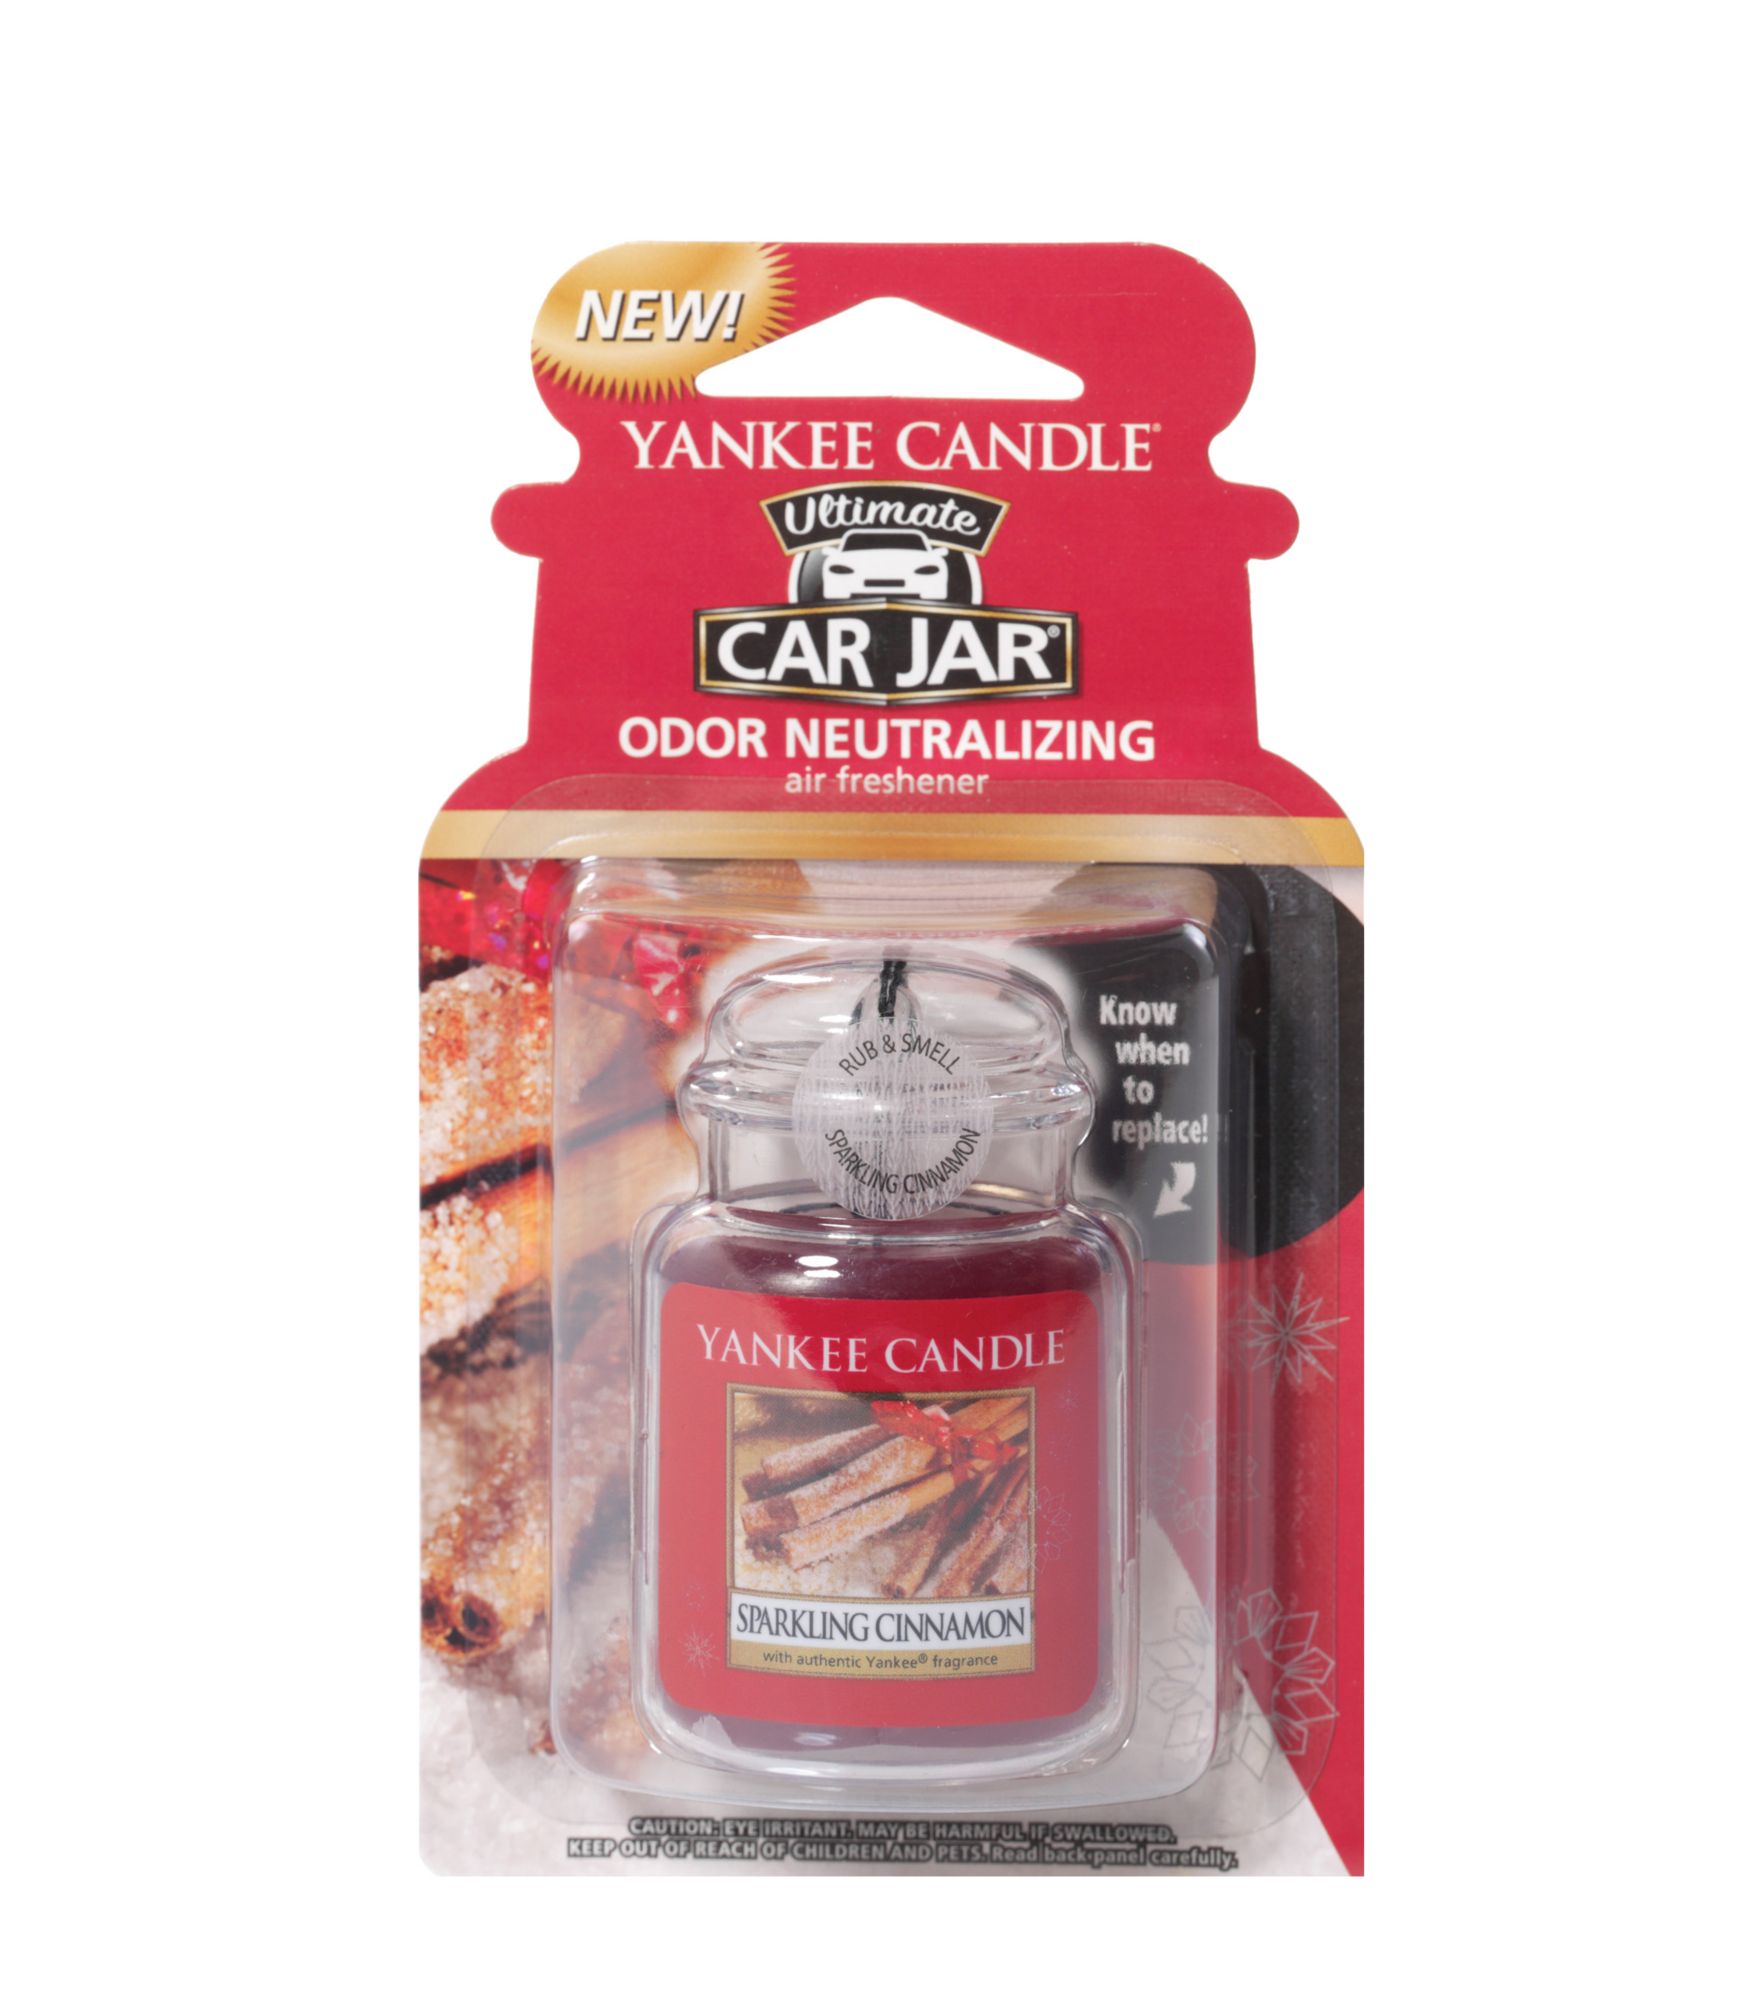 Yankee Candle Car Jar Pink Sands - Car Perfume Set